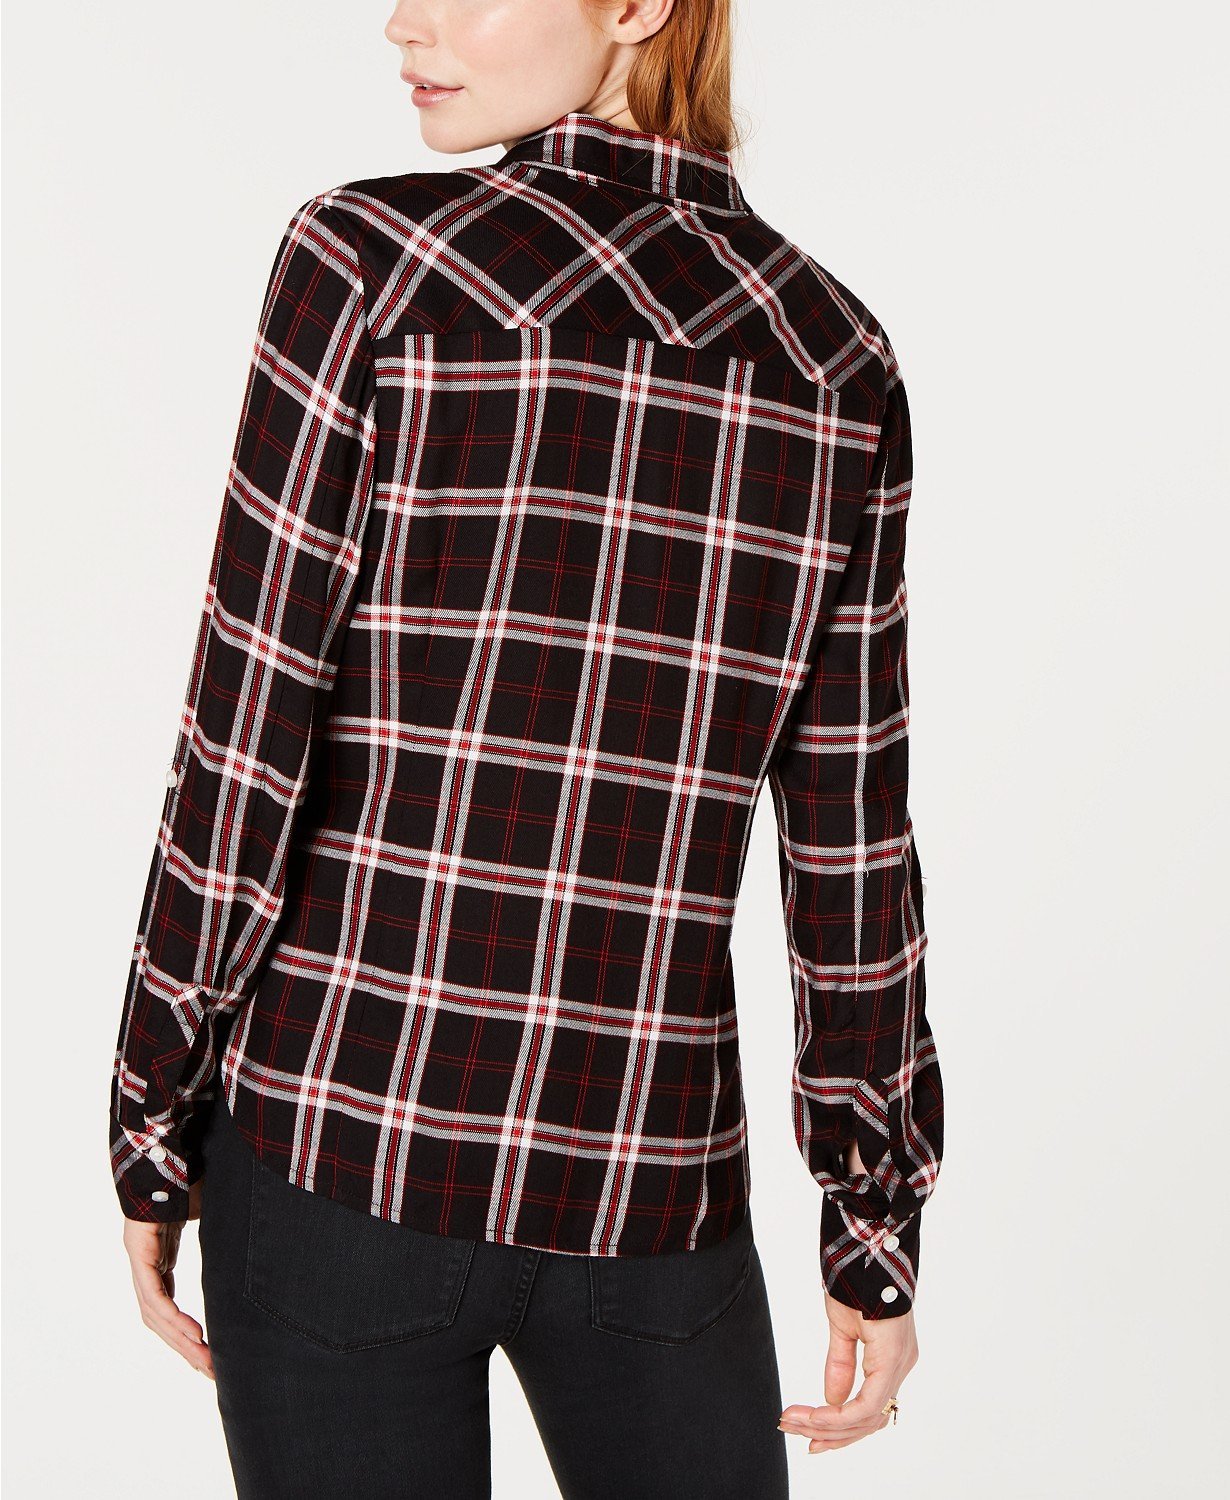 Tommy Hilfiger Plaid Button-Up Shirt - TopLine Fashion Lounge